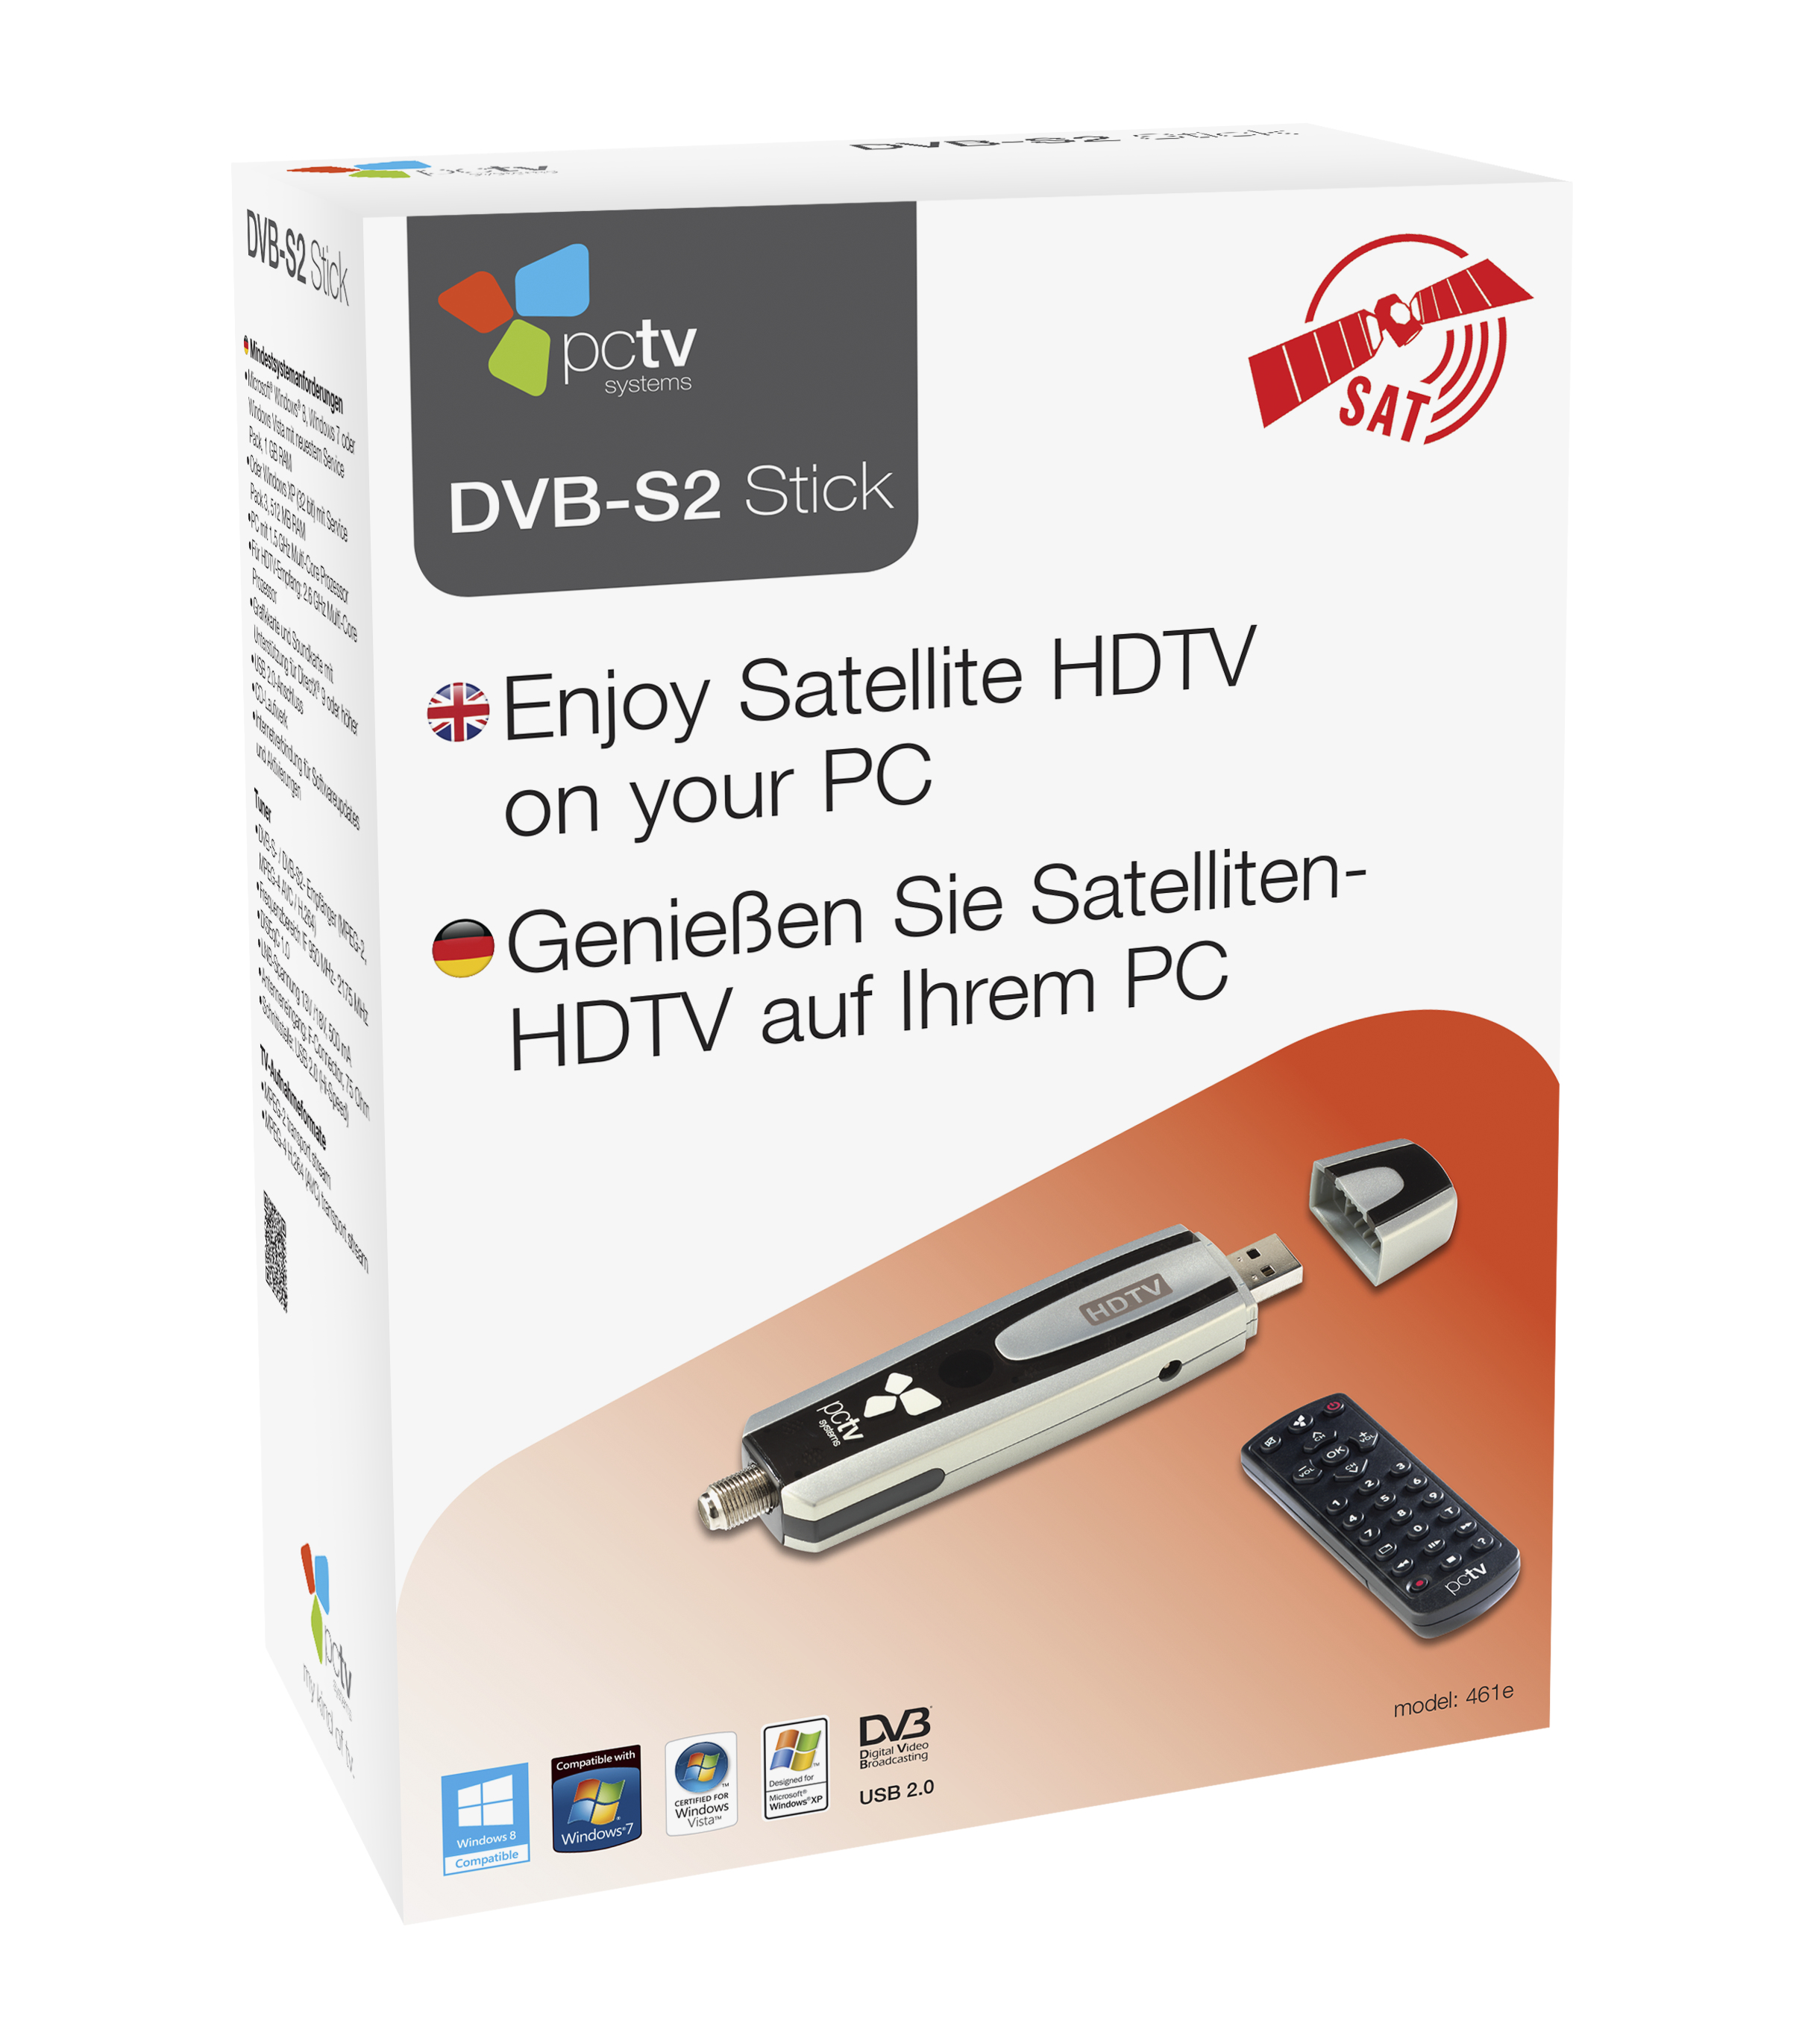 Hauppauge PCTV DVB-S2 Stick 461e - Digitaler TV-Empfänger